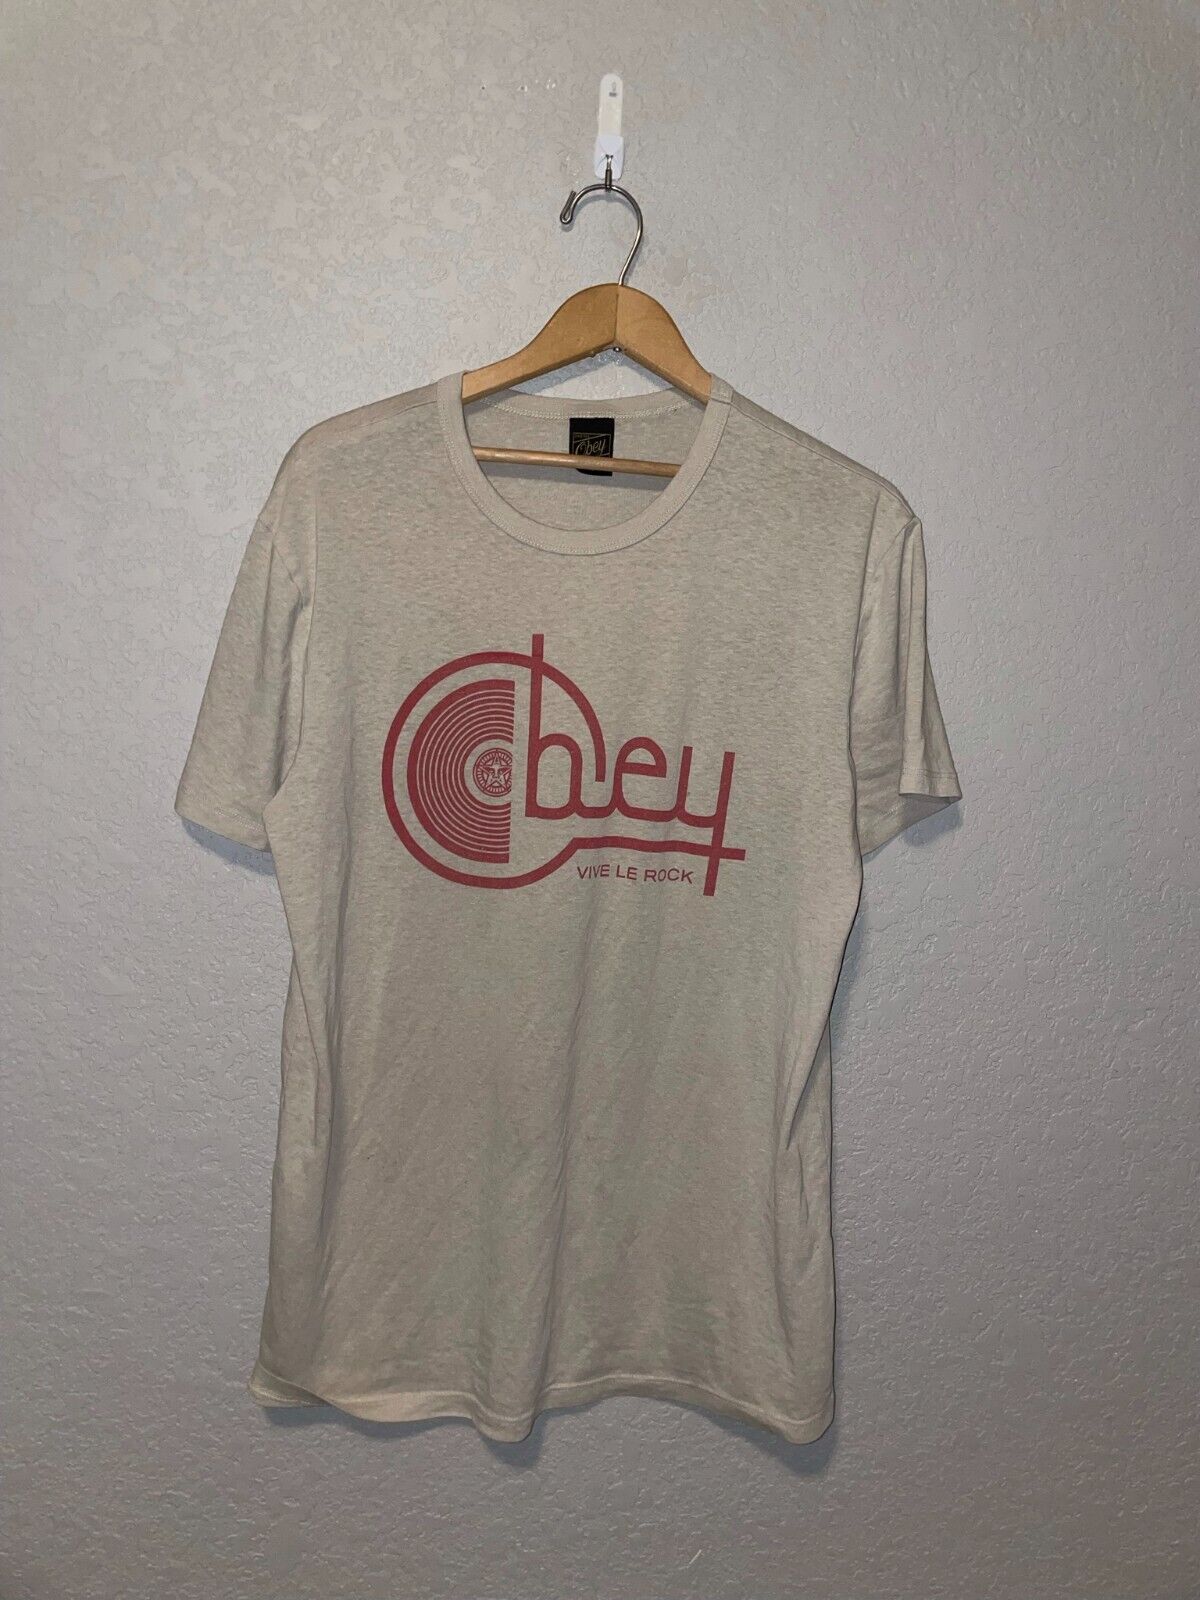 Ongeëvenaard Recreatie organiseren Obey Vive Le Rock Music 50% Polyester 25% Cotton 25% Rayon Brown Shirt L  Large | eBay